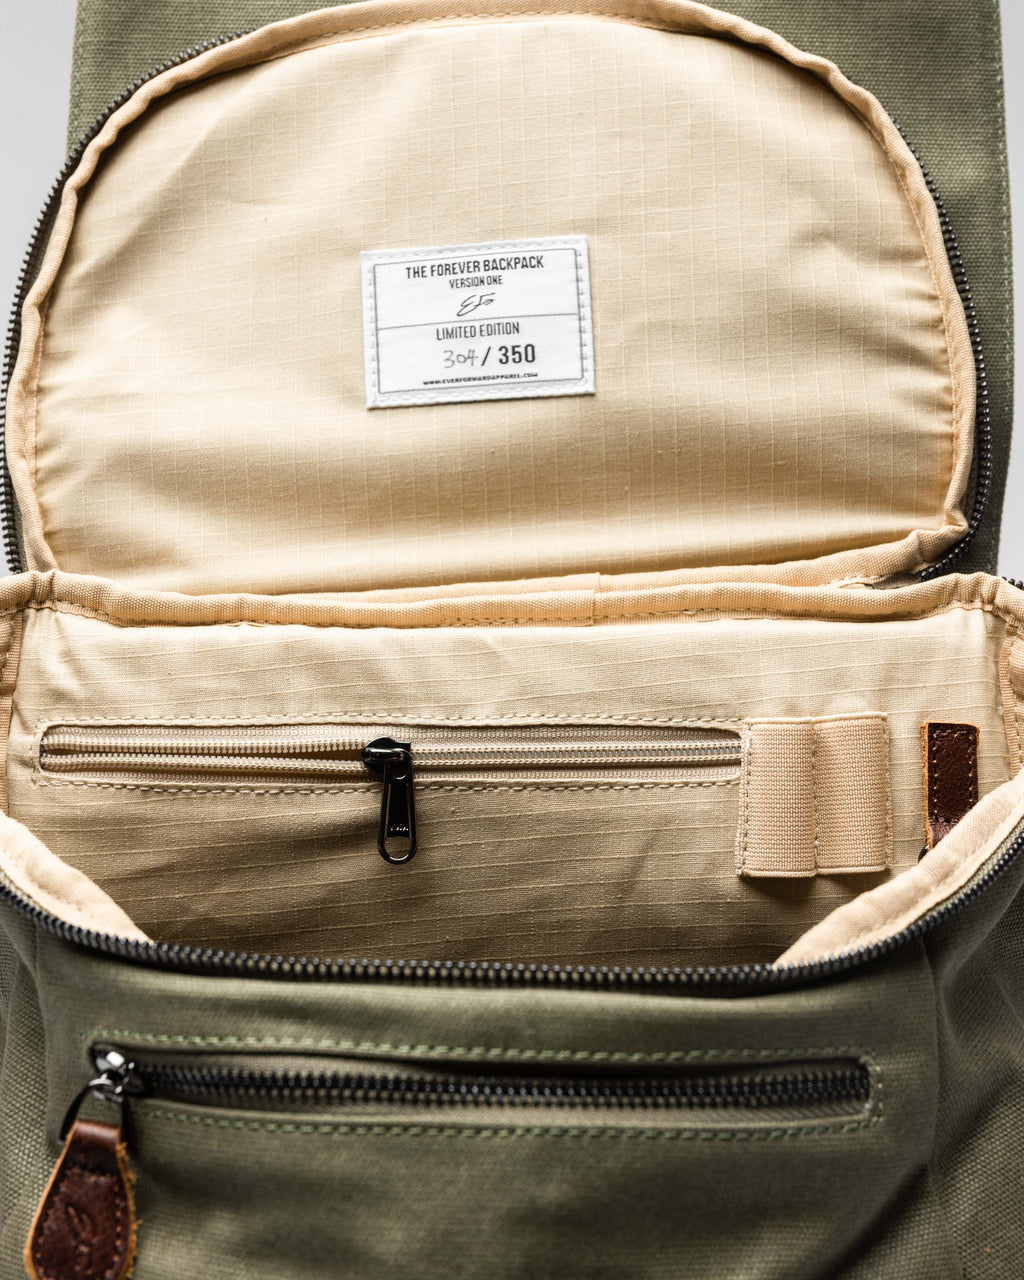 The Forever Backpack ~ Olive